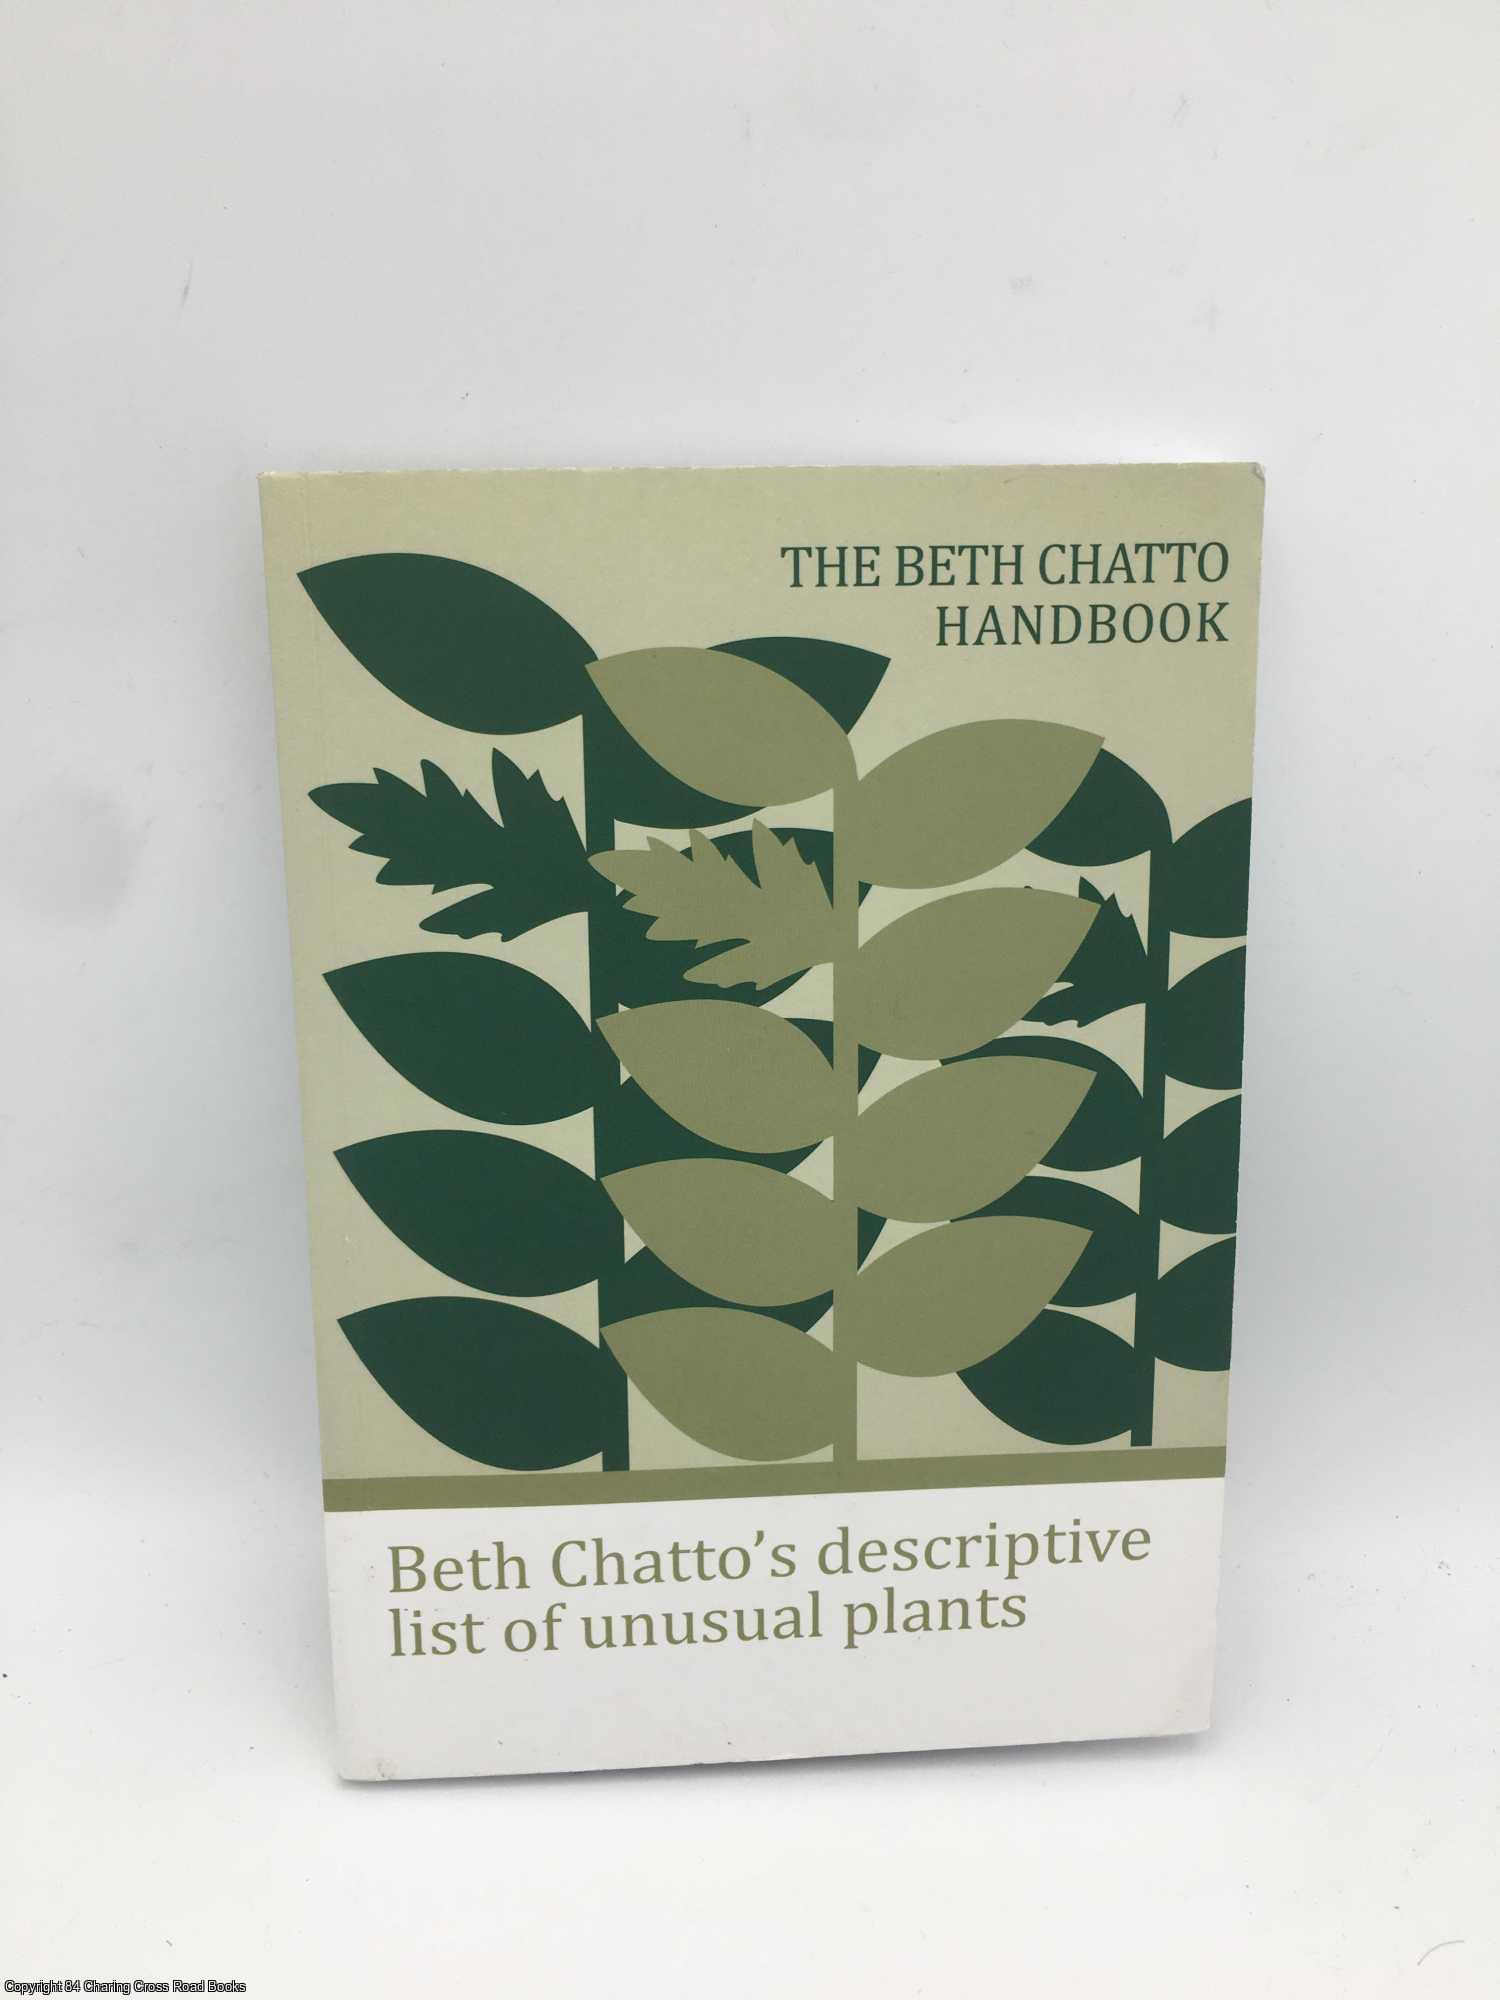  - The Beth Chatto Handbook: Beth Chatto's Descriptive List of Unusual Plants